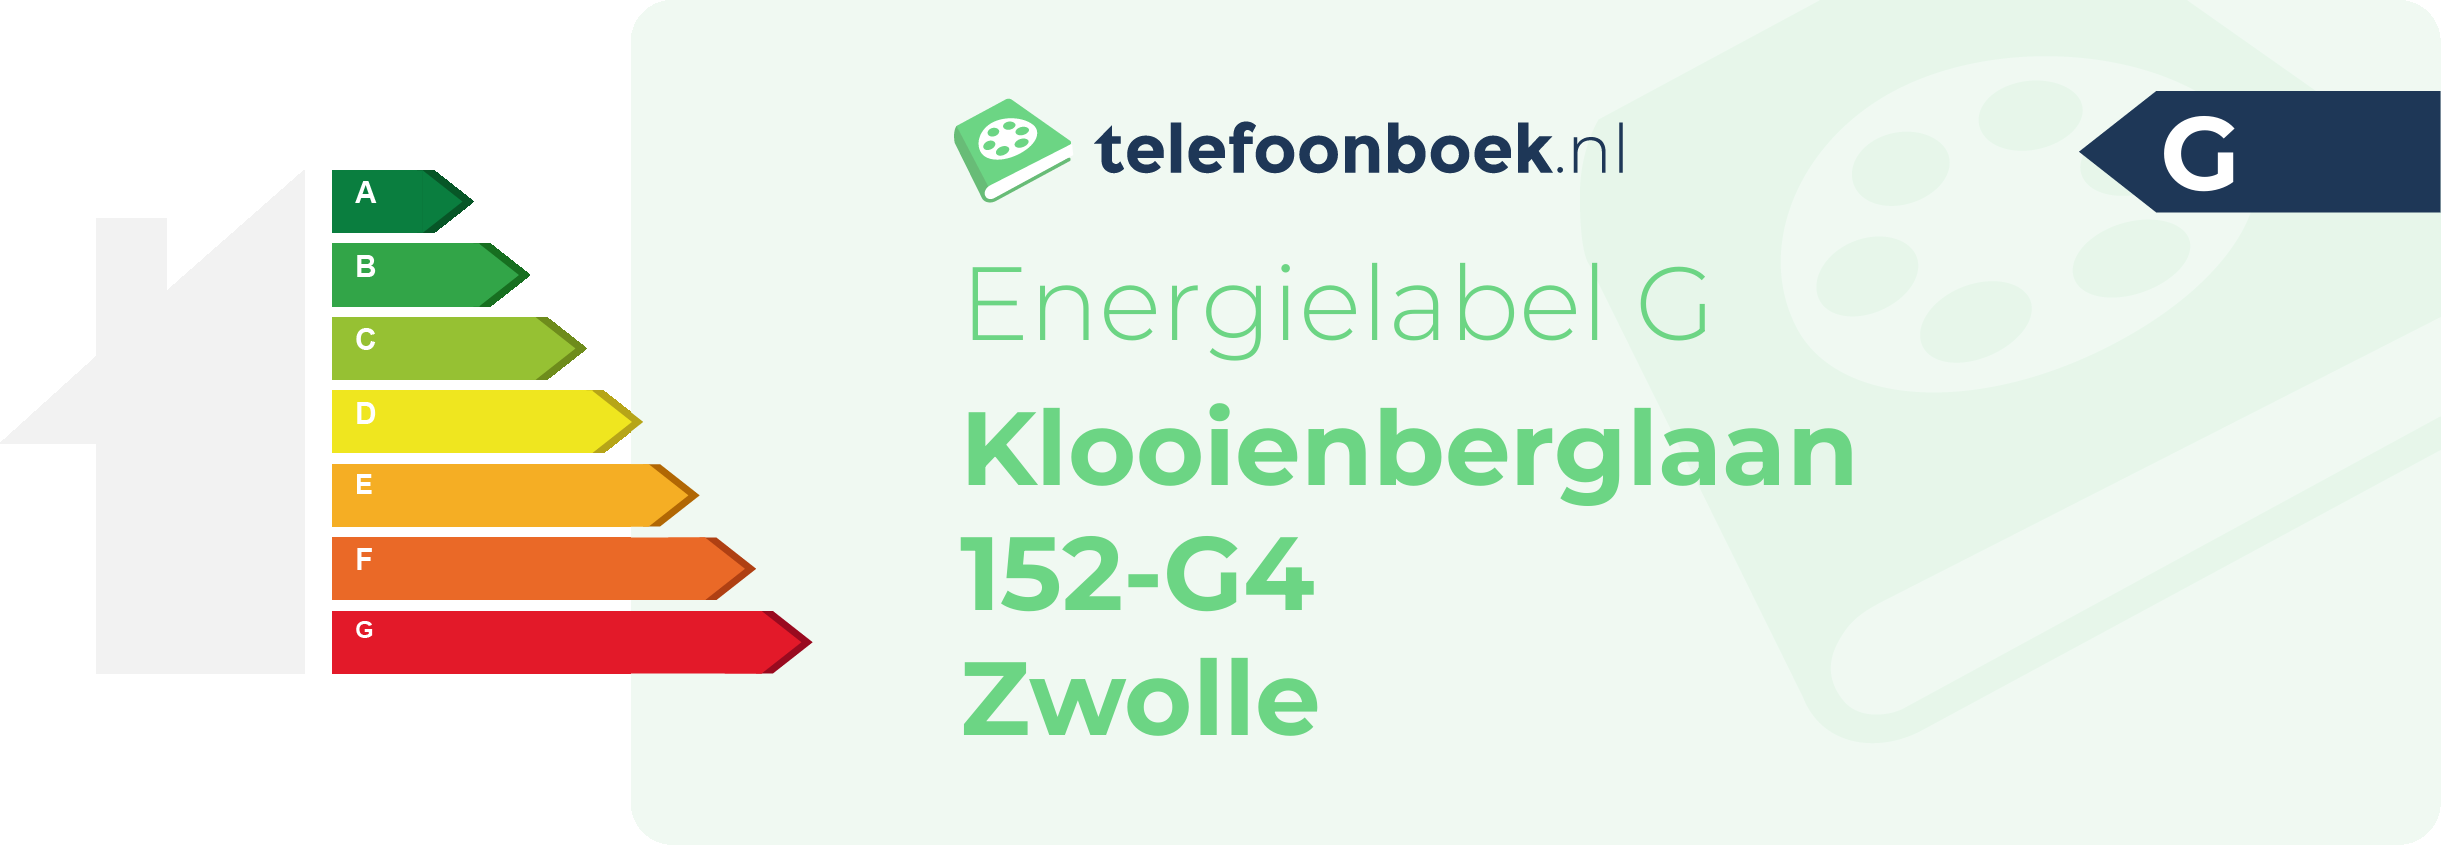 Energielabel Klooienberglaan 152-G4 Zwolle